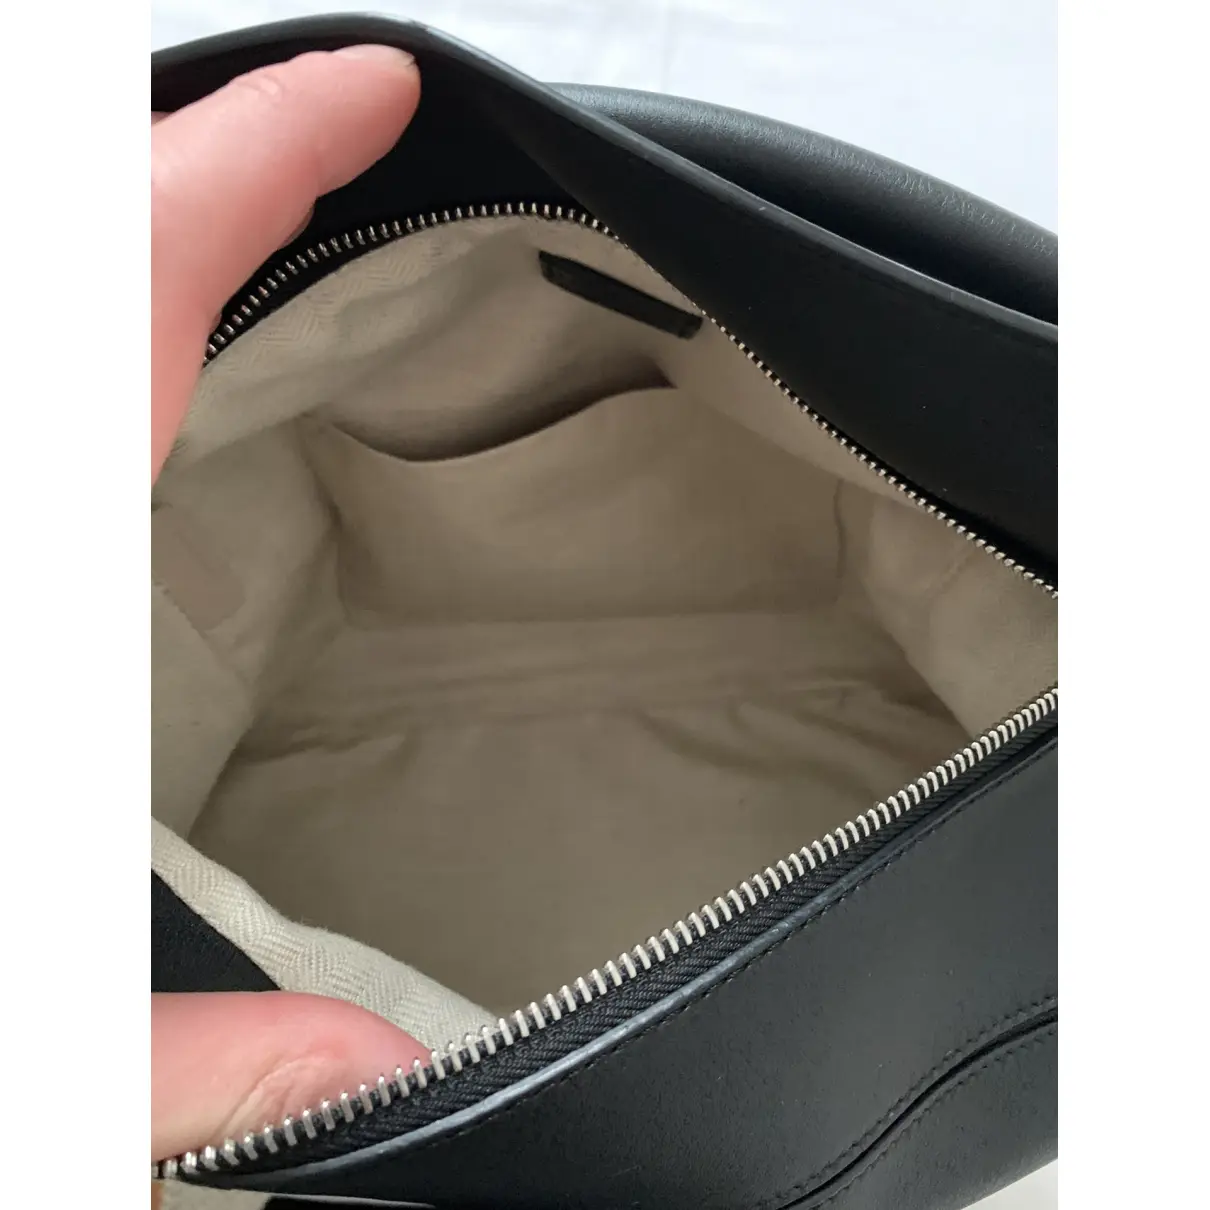 Buy Loewe Puzzle leather handbag online